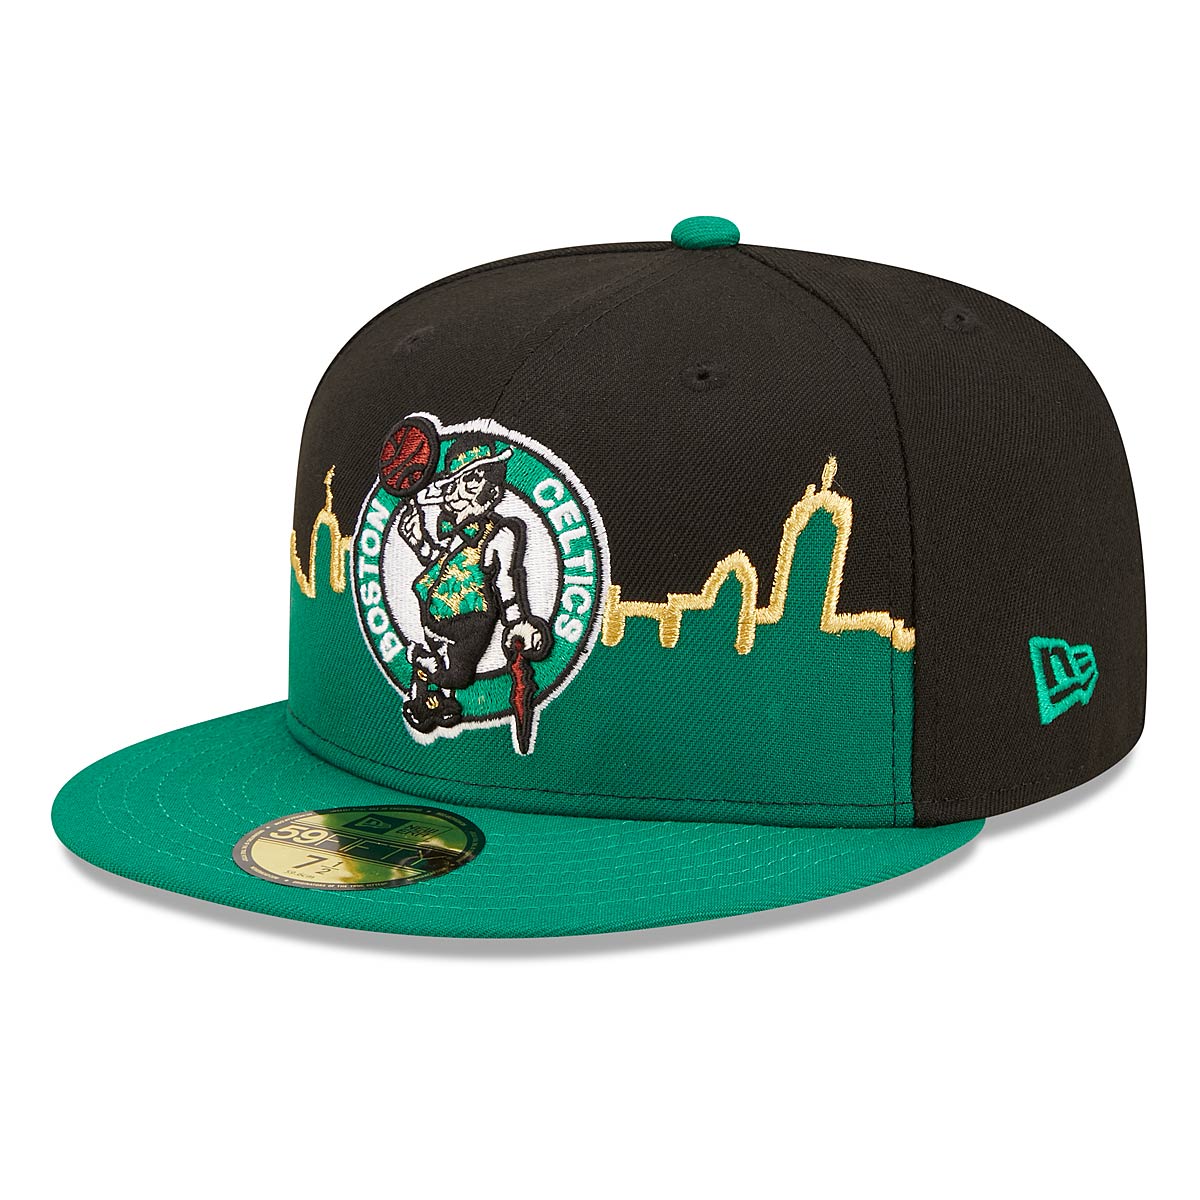 New Era Nba Boston Celtics Tipoff 5950 Cap, Green